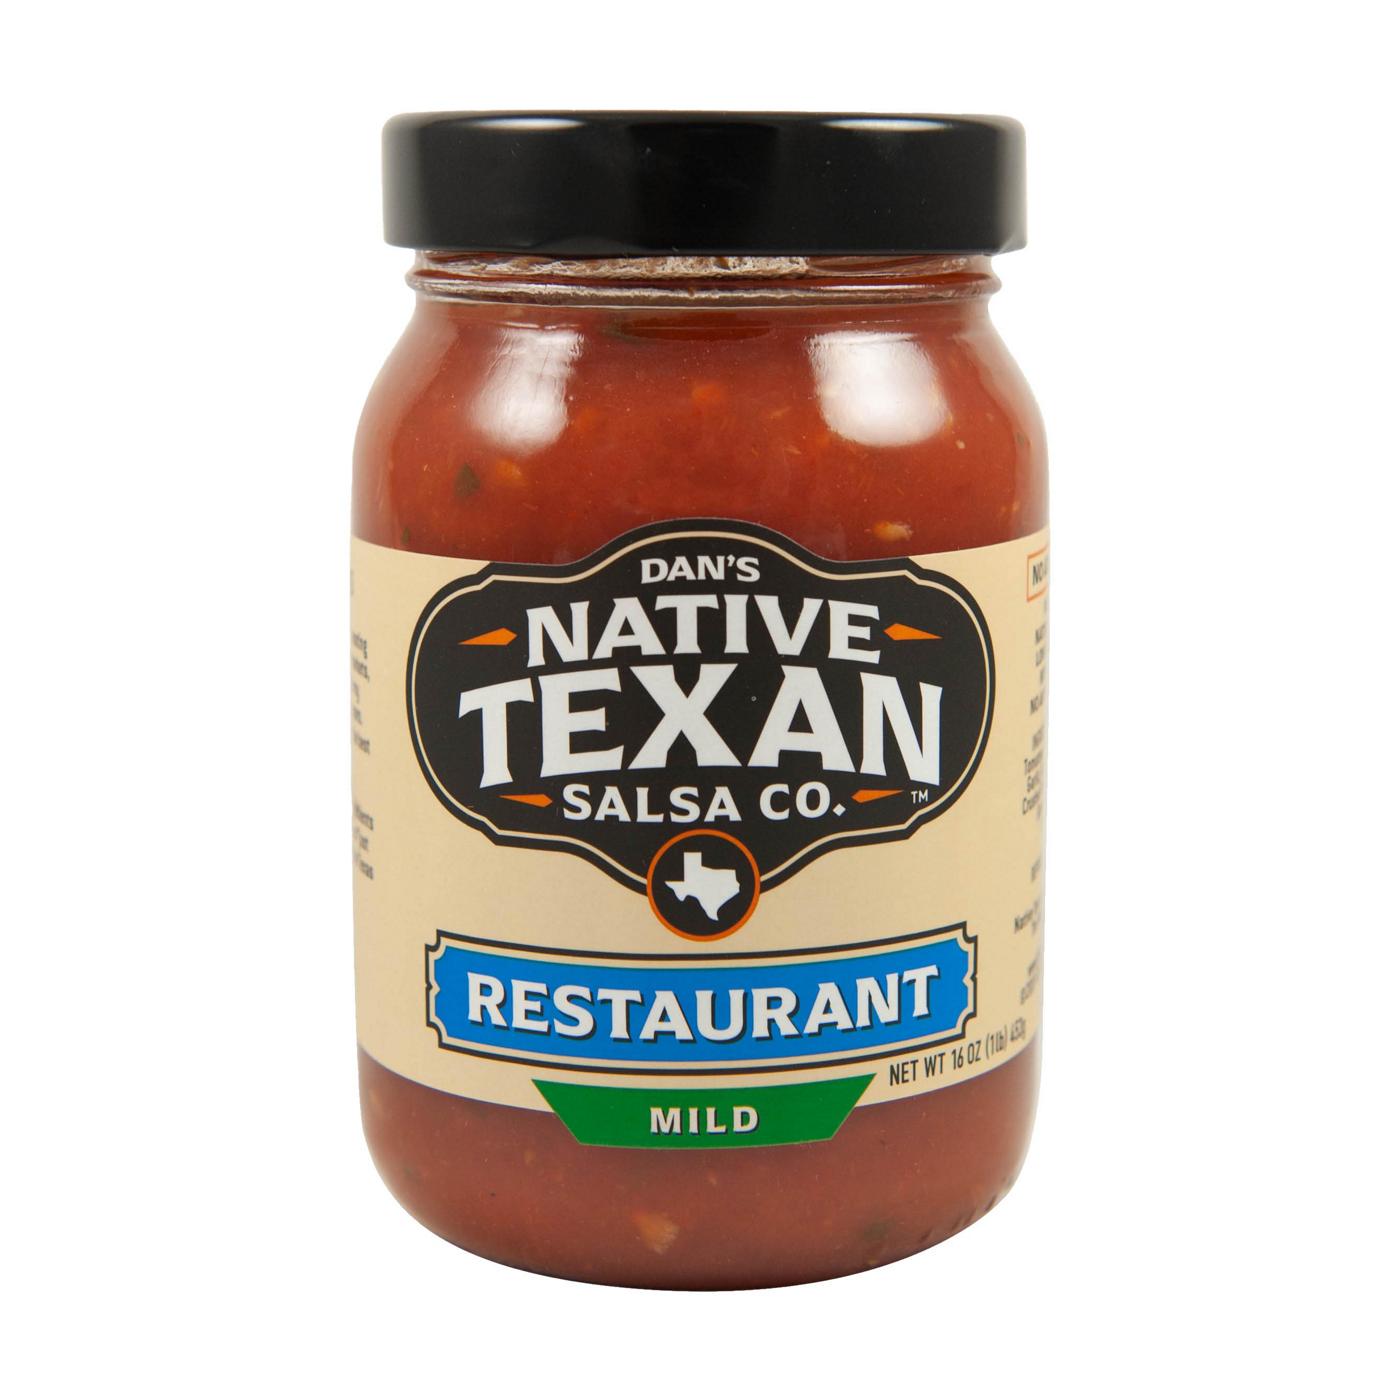 Native Texan Mild Restaurant Style Salsa; image 1 of 2